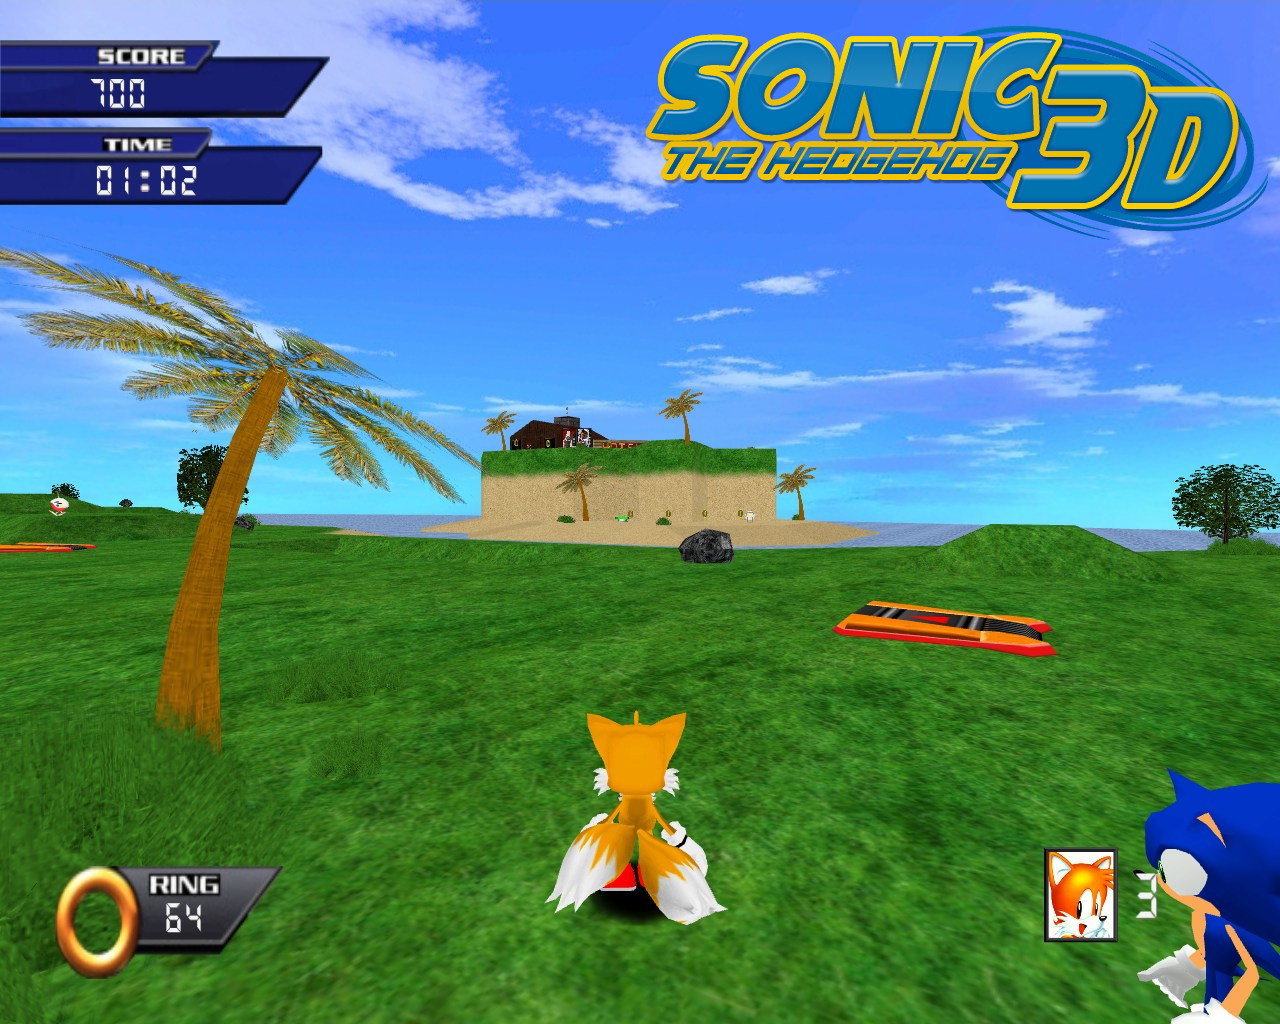 Sonic The Hedgehog 3D v0.3 (Windows) file - Indie DB